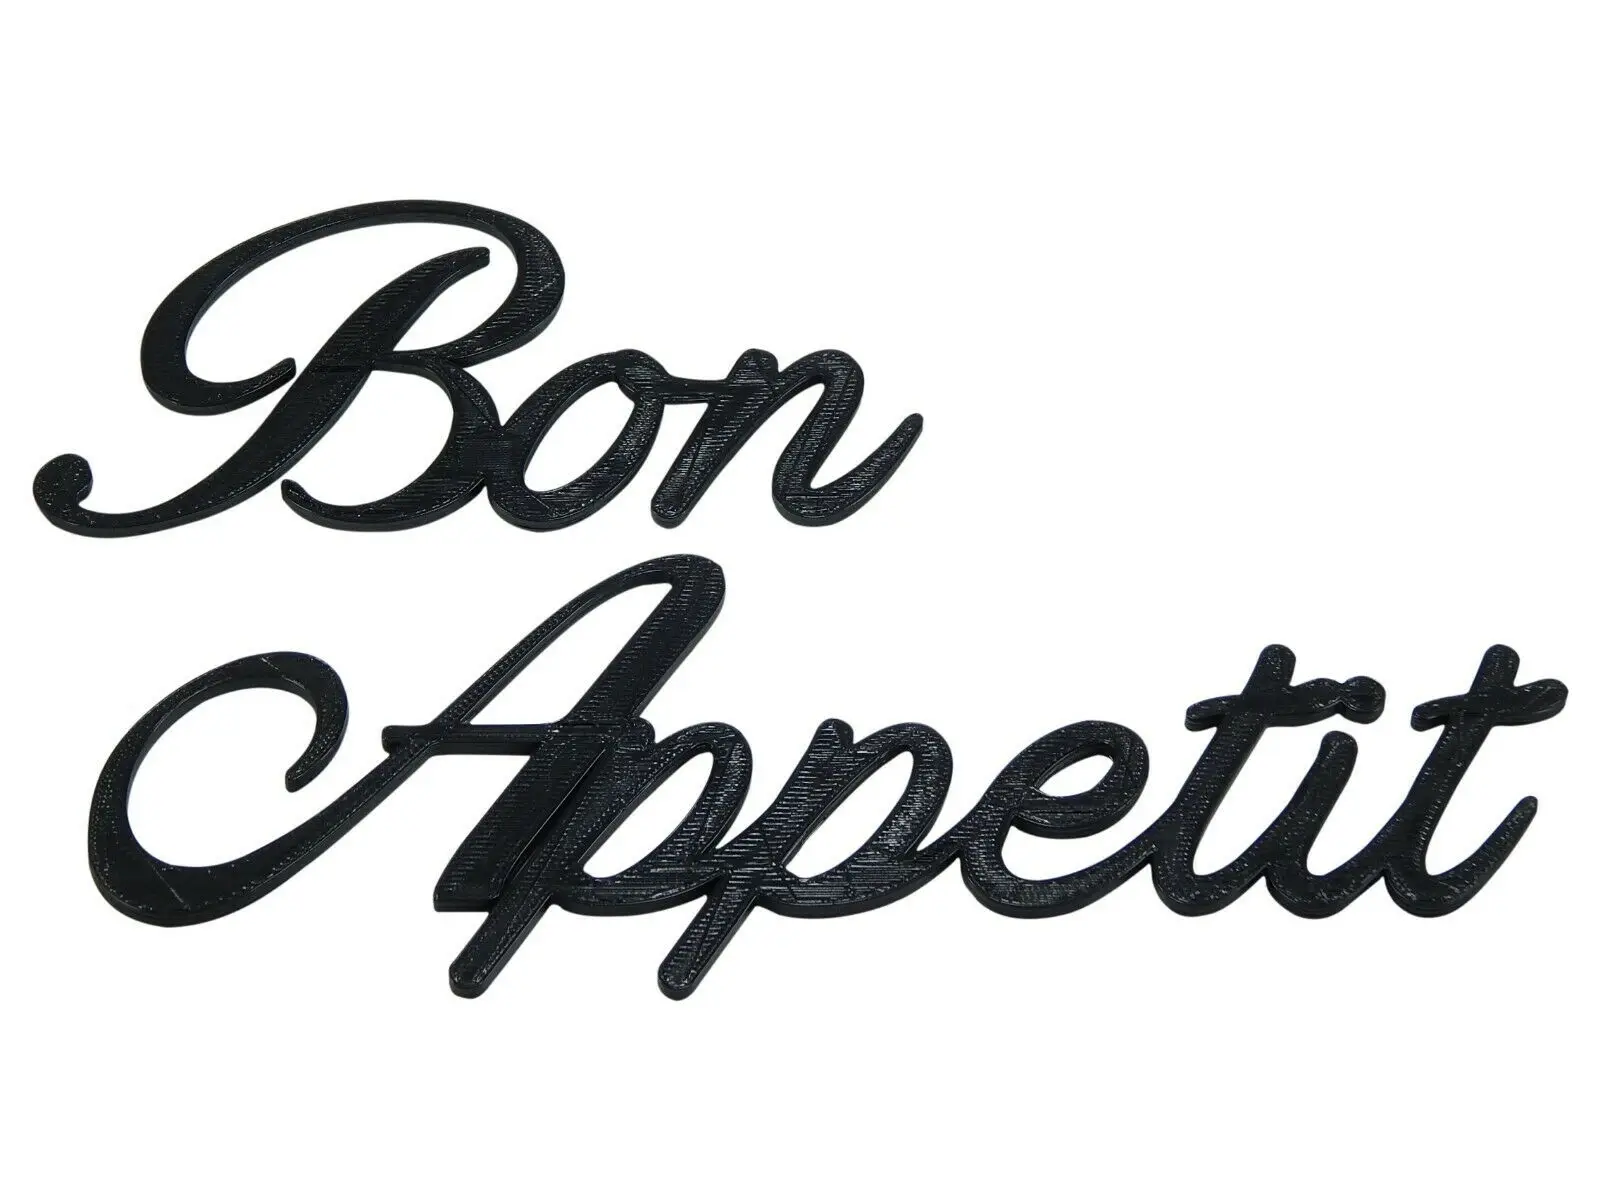 

Amazon Hot Sale Culture World Bon Appetit Word Art Sign Decal Kitchen Wall Hanging Decor Cursive Script Typography 9'', Black